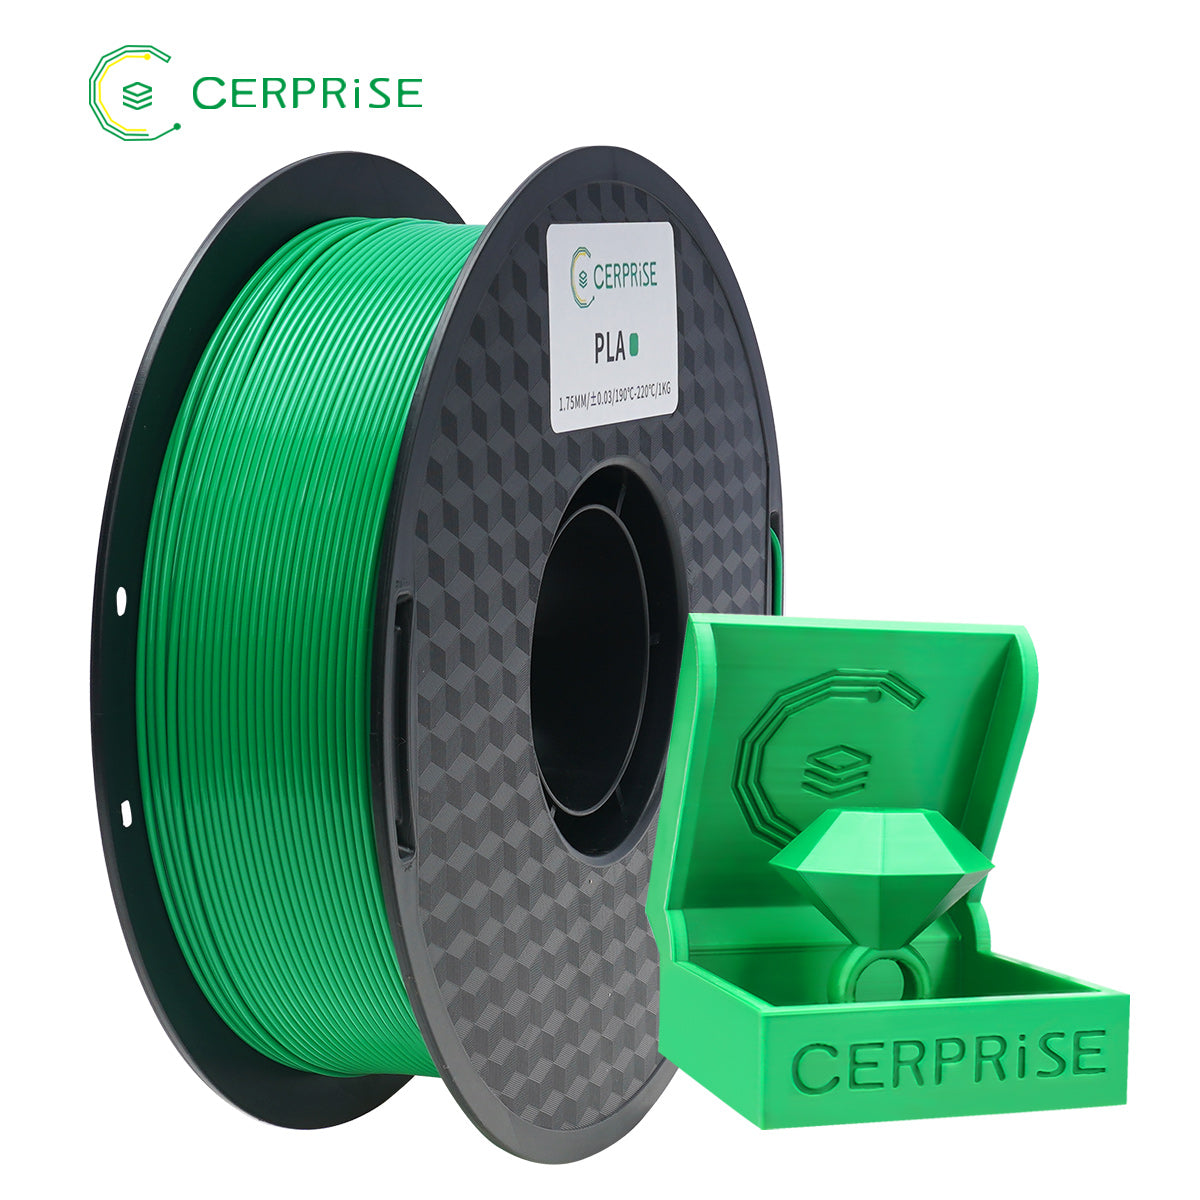 CERPRiSE Filament 1.75mm,1 kg (2.2lbs) Spool